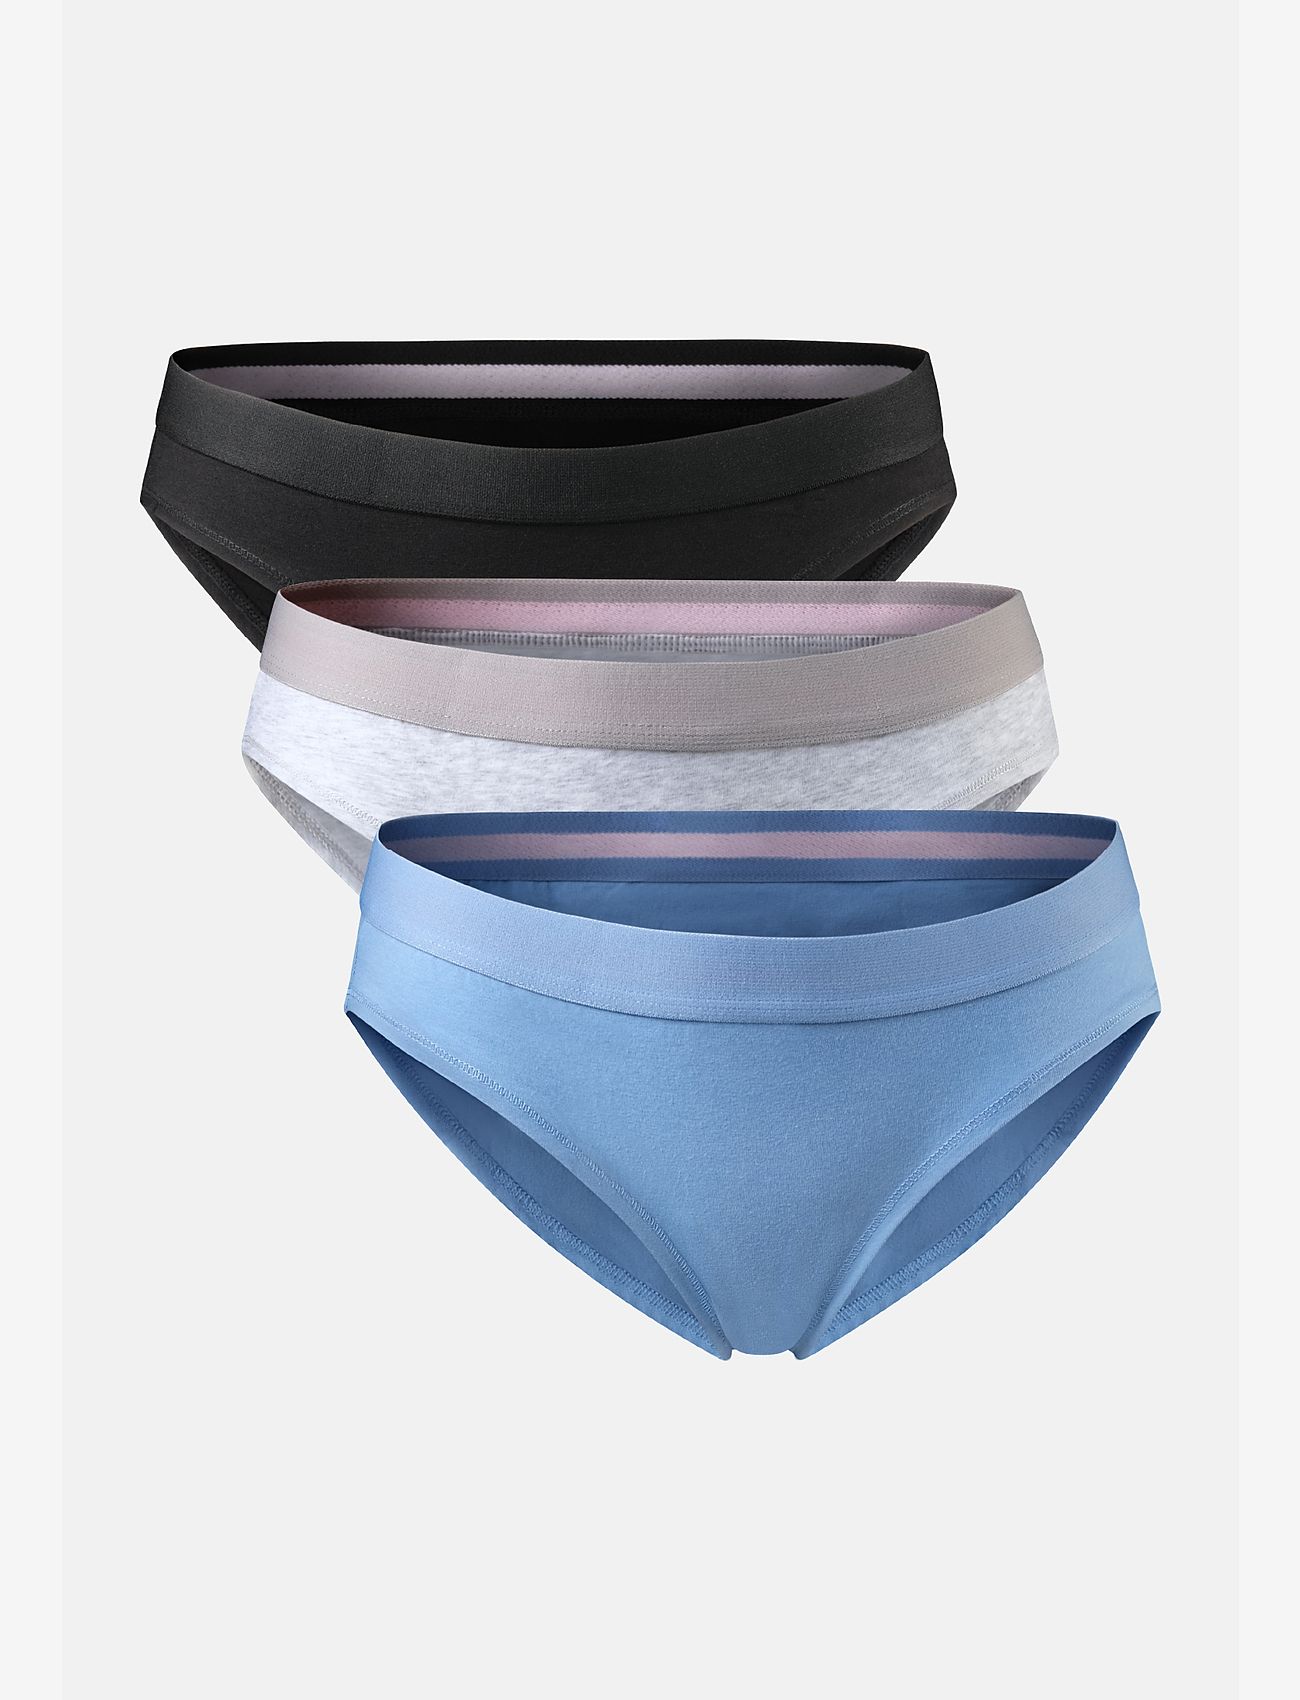 Danish Endurance - Organic Cotton Bikini 3 Pack - lowest prices - multicolor (1x black, 1x grey mélange, 1x light blue) - 0